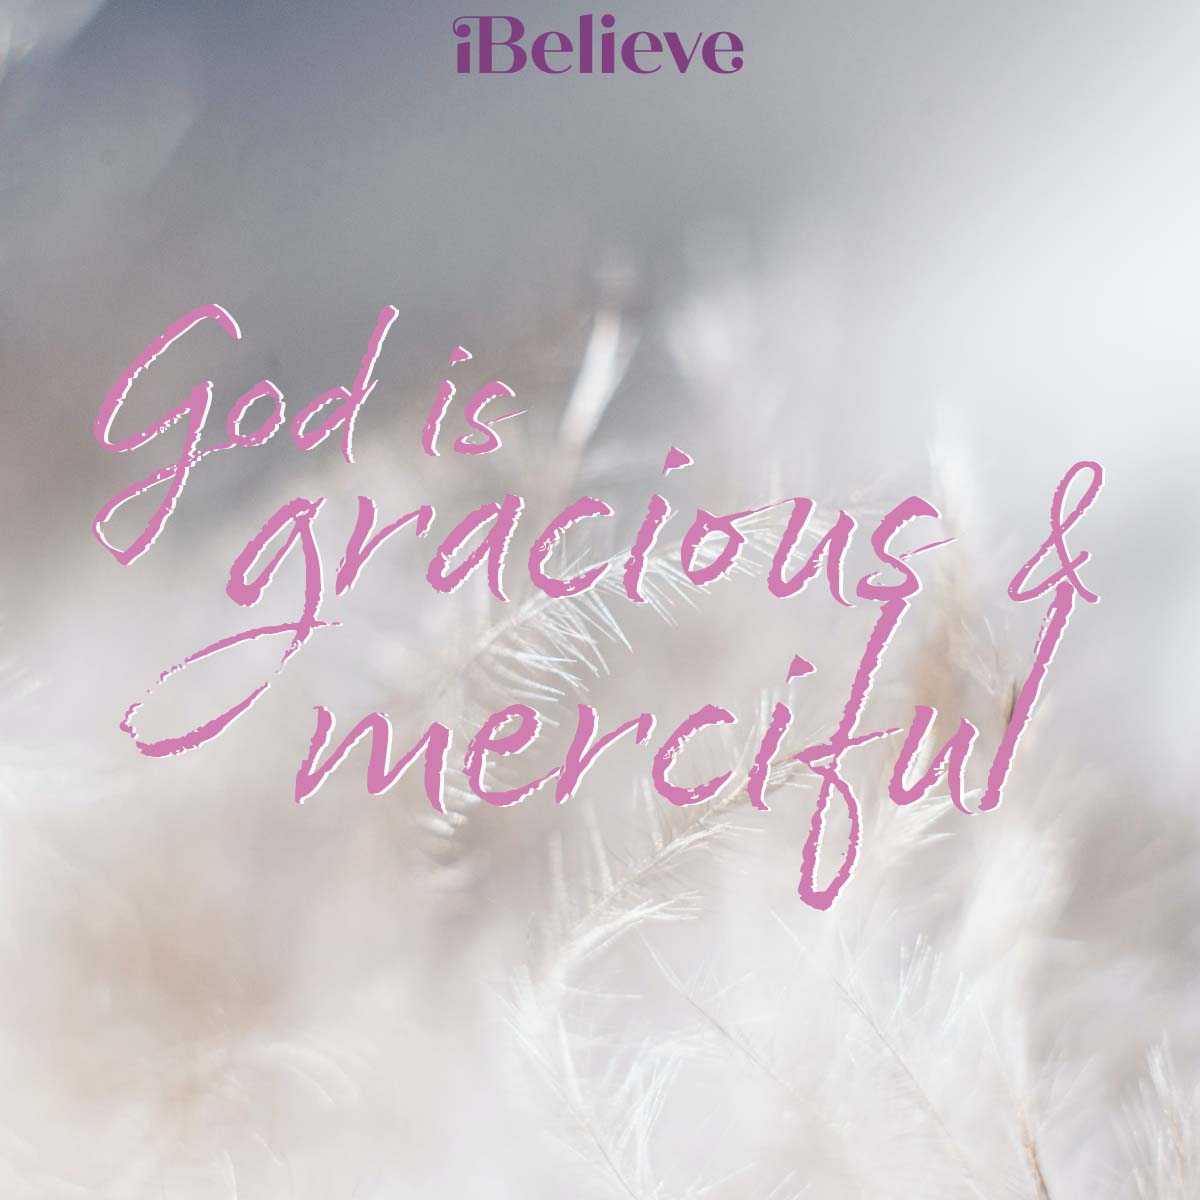 God is gracious and merciful, inspirational image